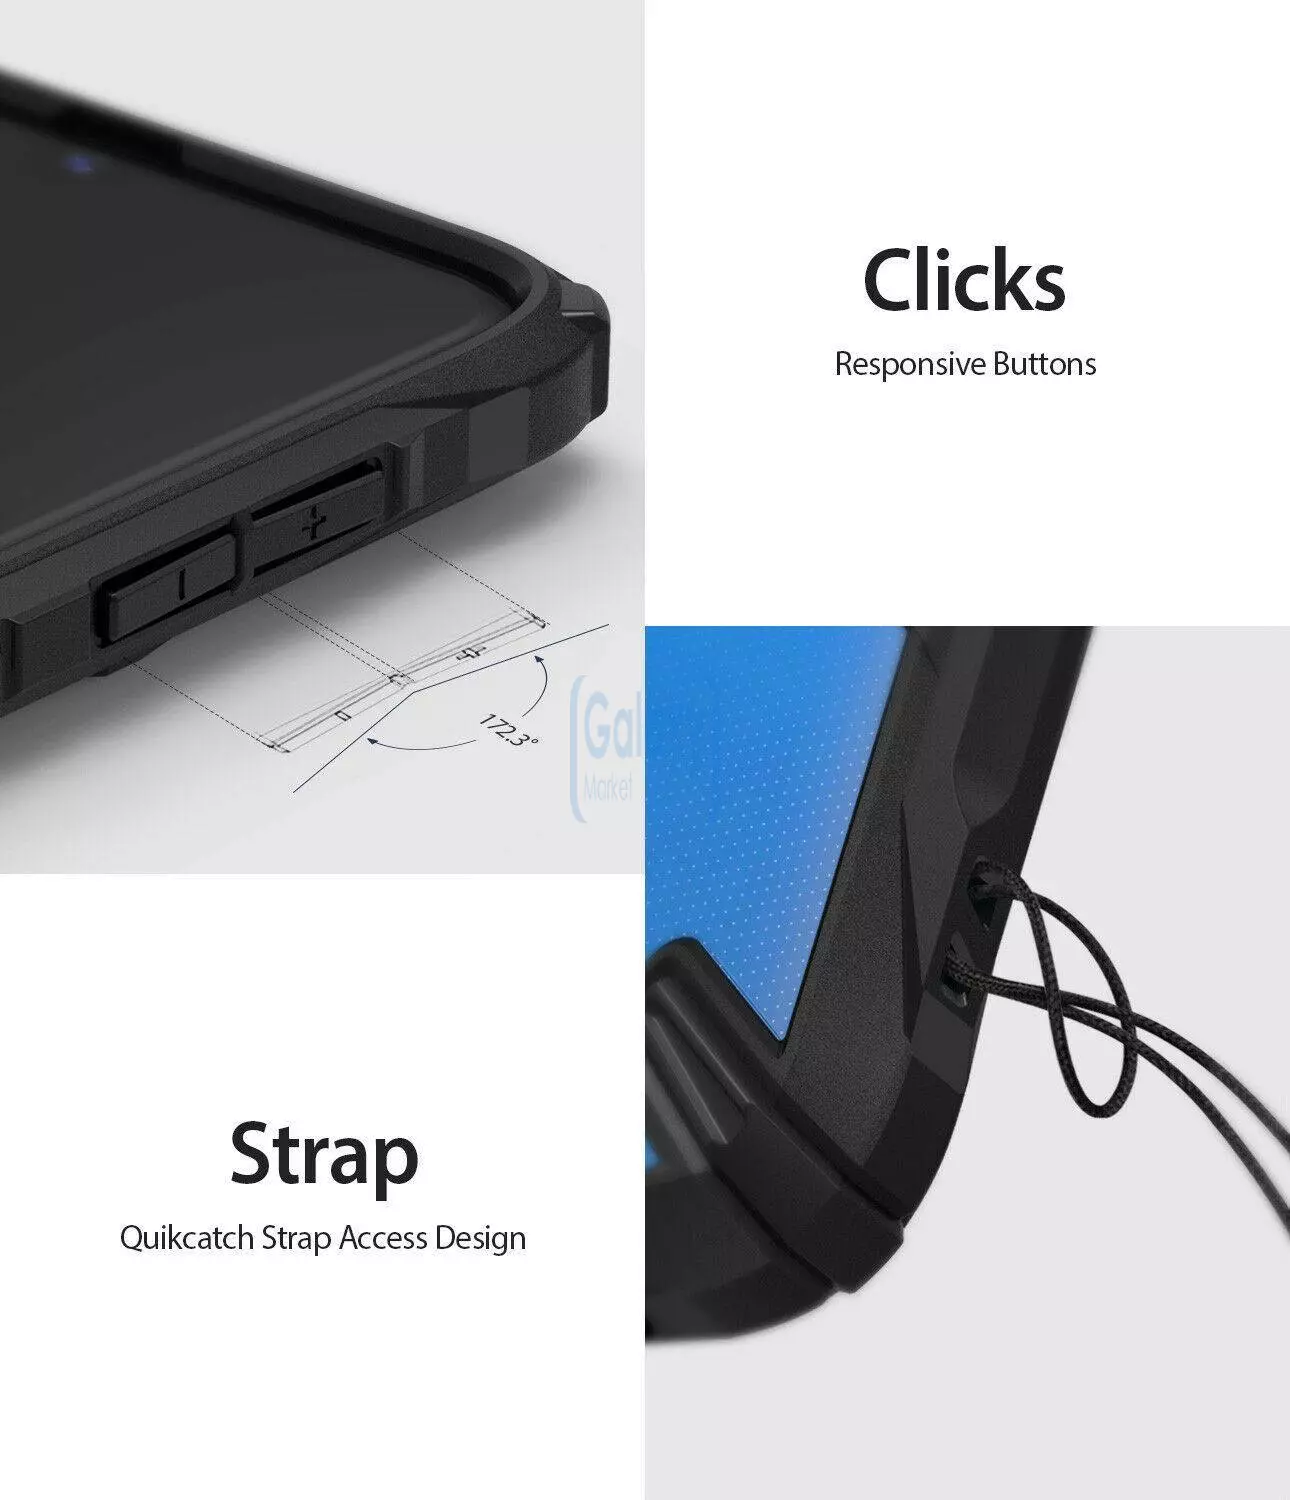 Чехол бампер Ringke Fusion-X для Samsung Galaxy A50 Black (Черный)